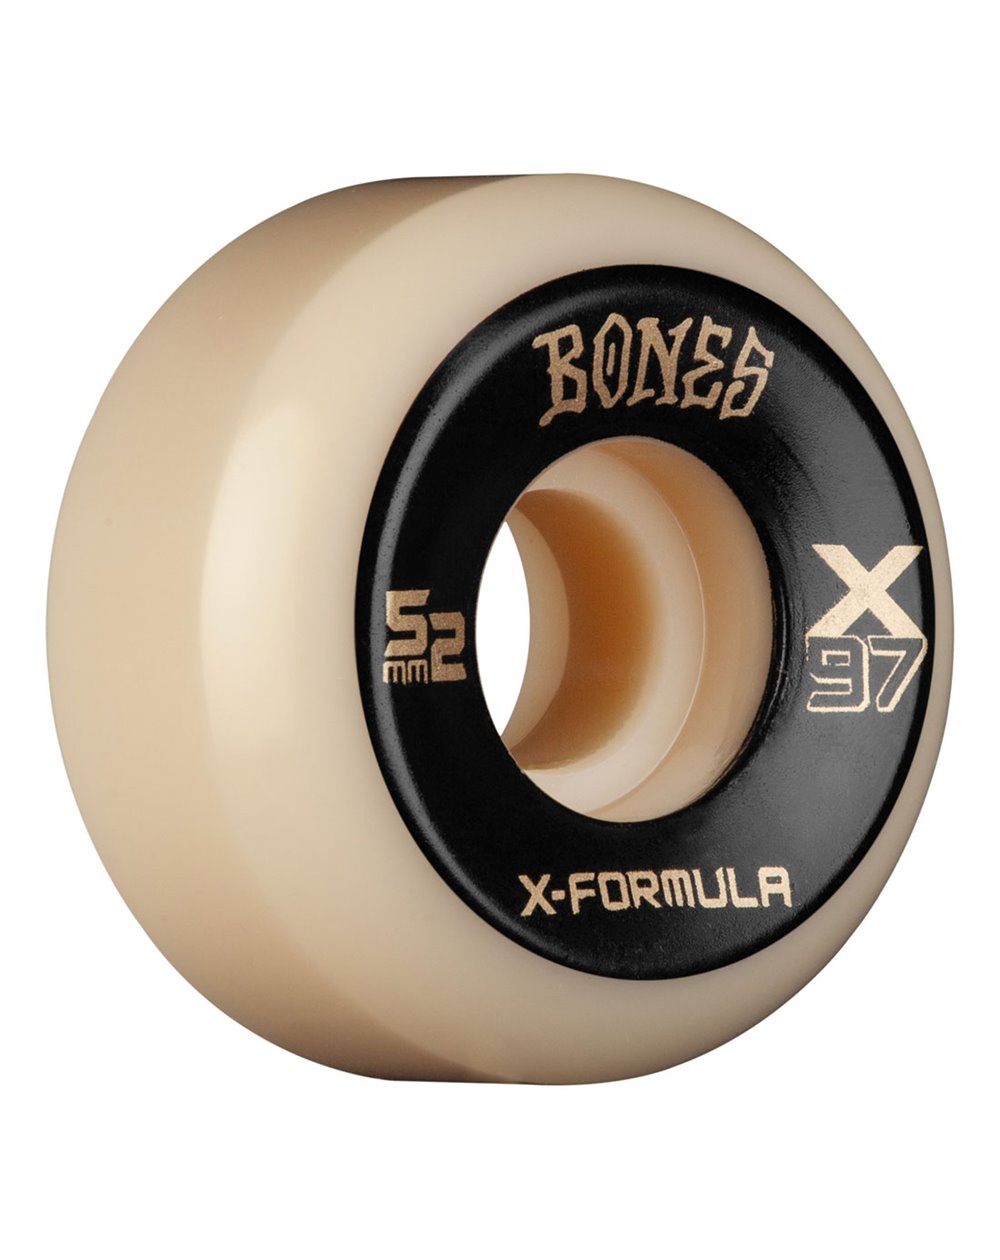 Bones Wheels Ruedas Skateboard X-Formula V5 Sidecut X-Ninety-Seven 52mm 97A 4 piezas